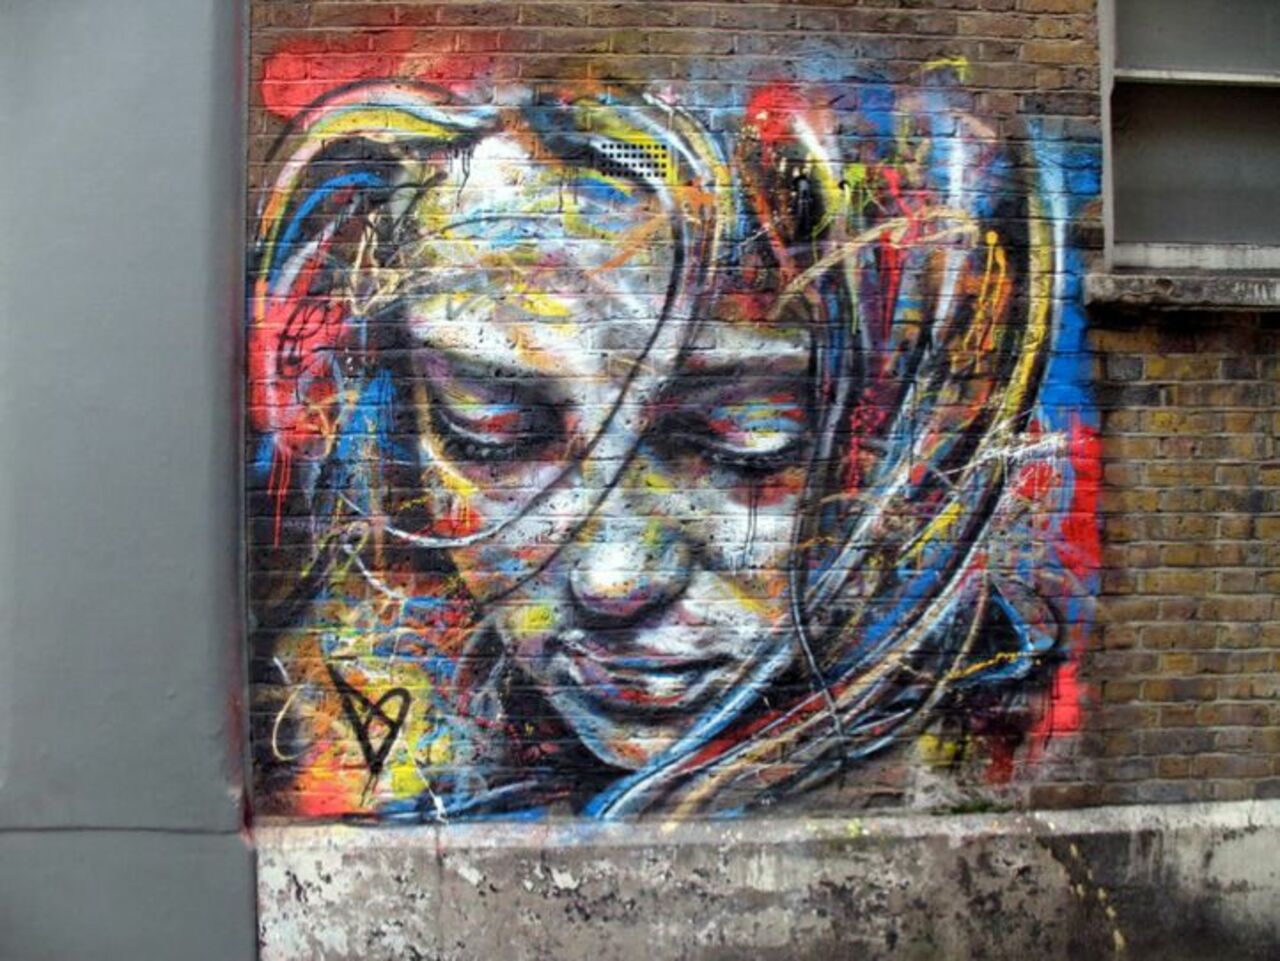 David Walker, London 2012 #streetart #art #graffiti #mural https://t.co/cotck0wRwm